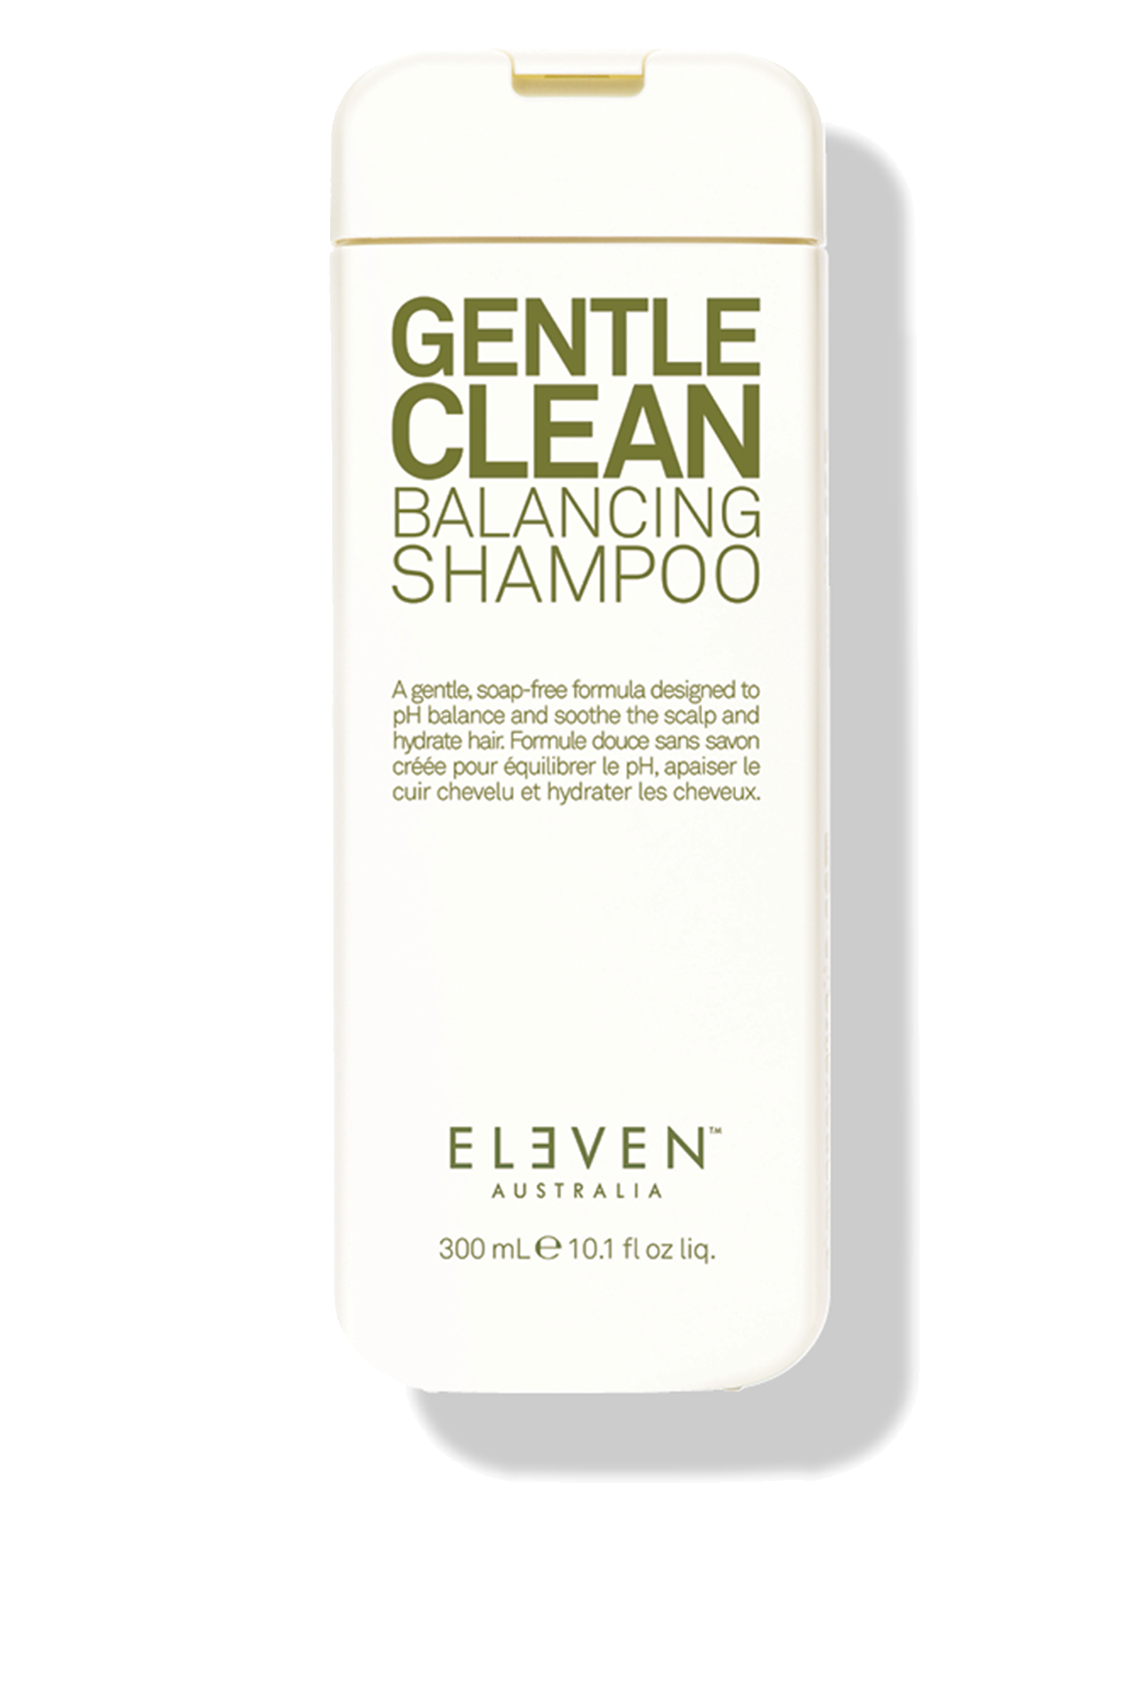 Eleven Australia gentle clean balancing shampoo